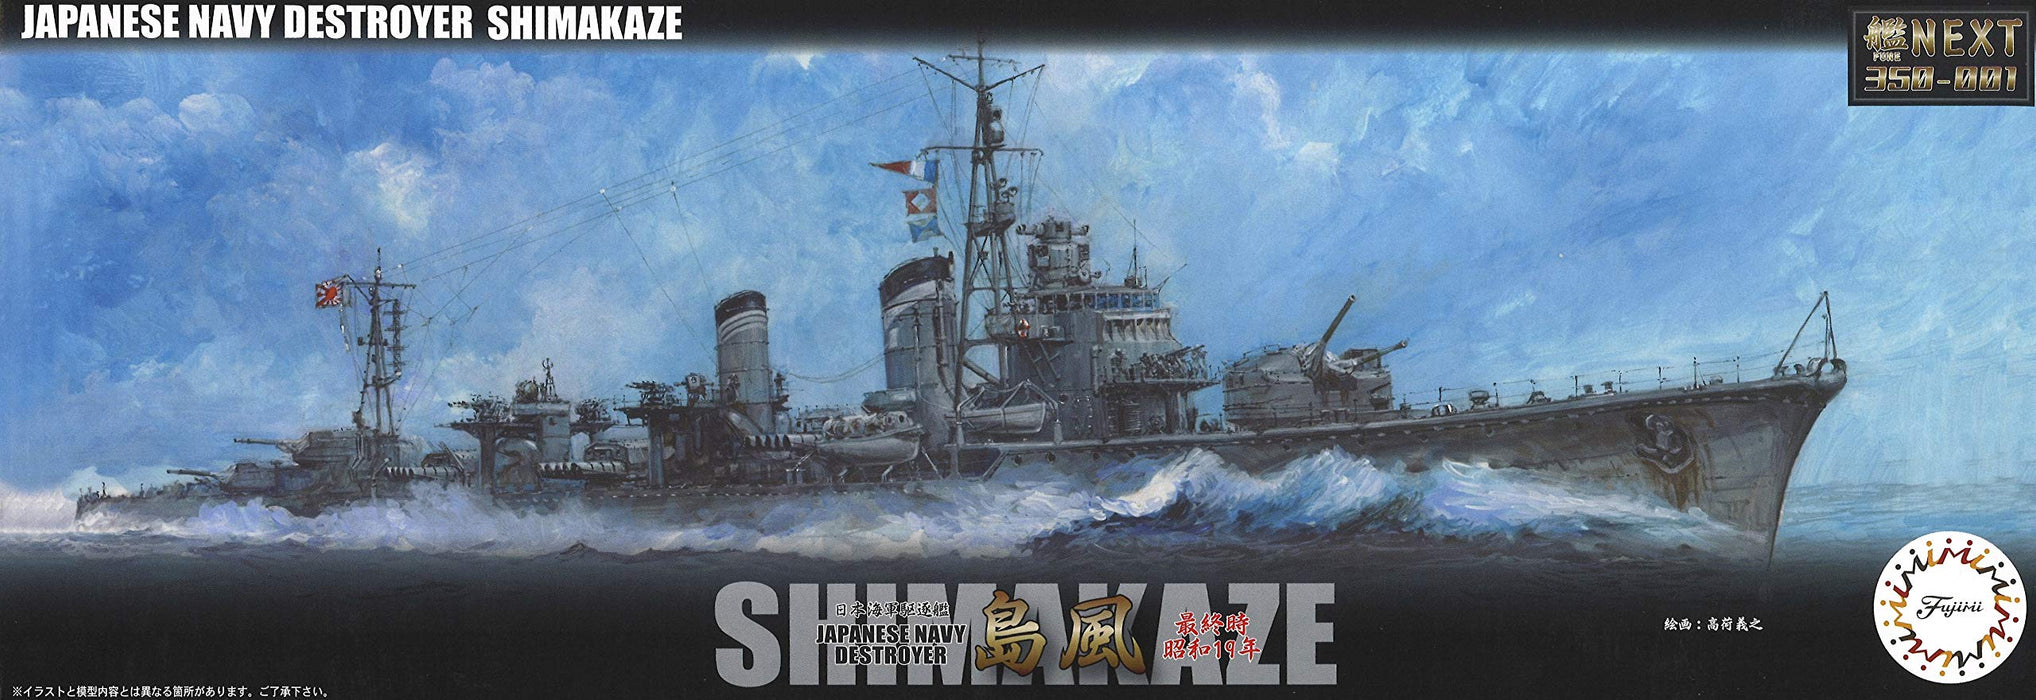 Fujimi Model 1/350 Ship Next Series No.1 Japanese Navy Destroyer Shimakaze Final Time/Showa 19 Farbcodiertes Plastikmodell 350 Ship Nx-1